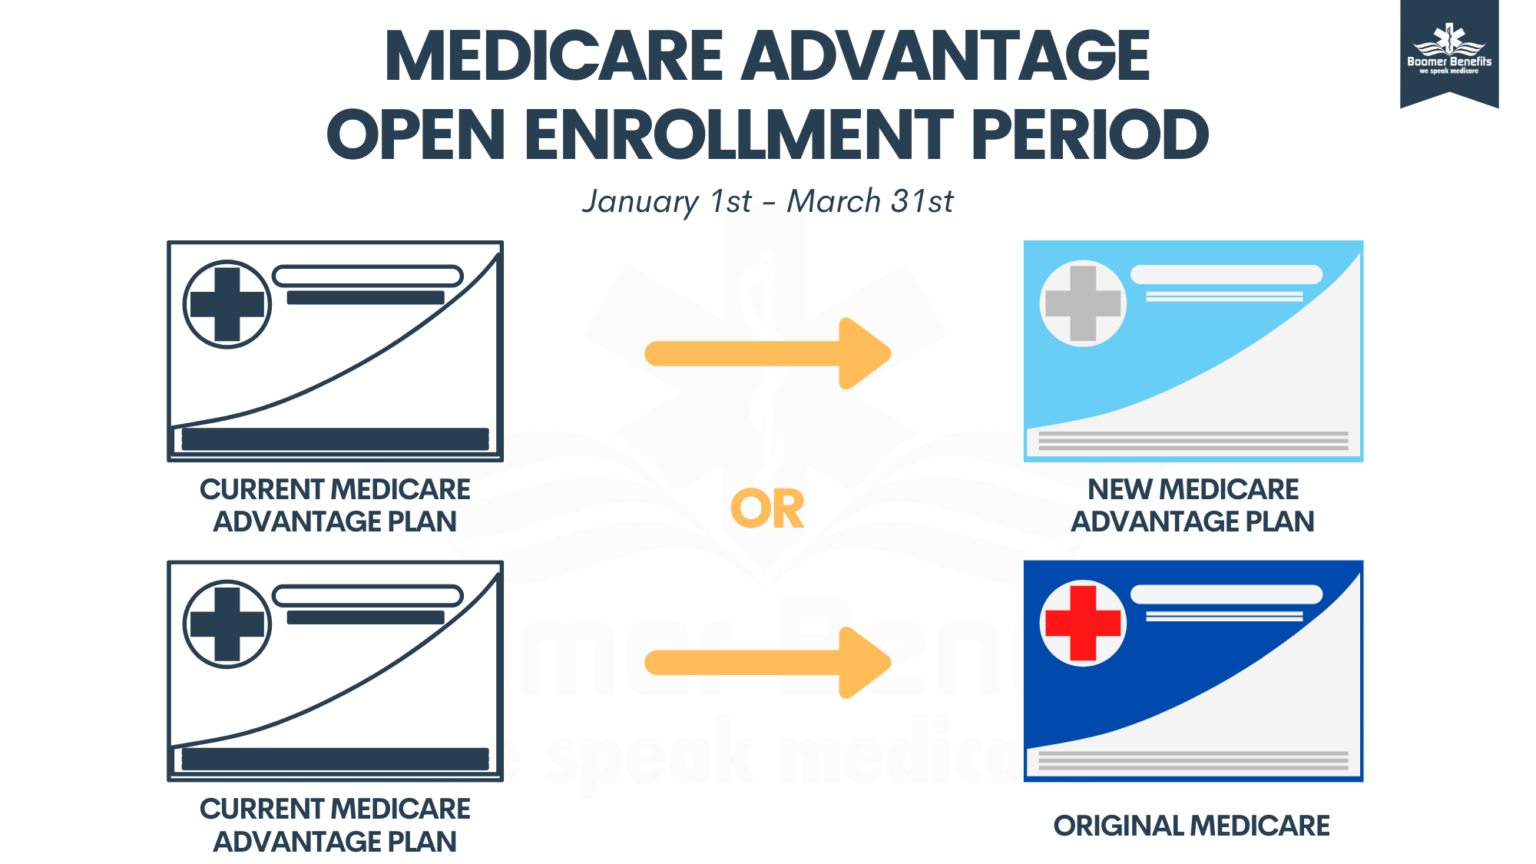 Medicare Advantage Open Enrollment Period 2021